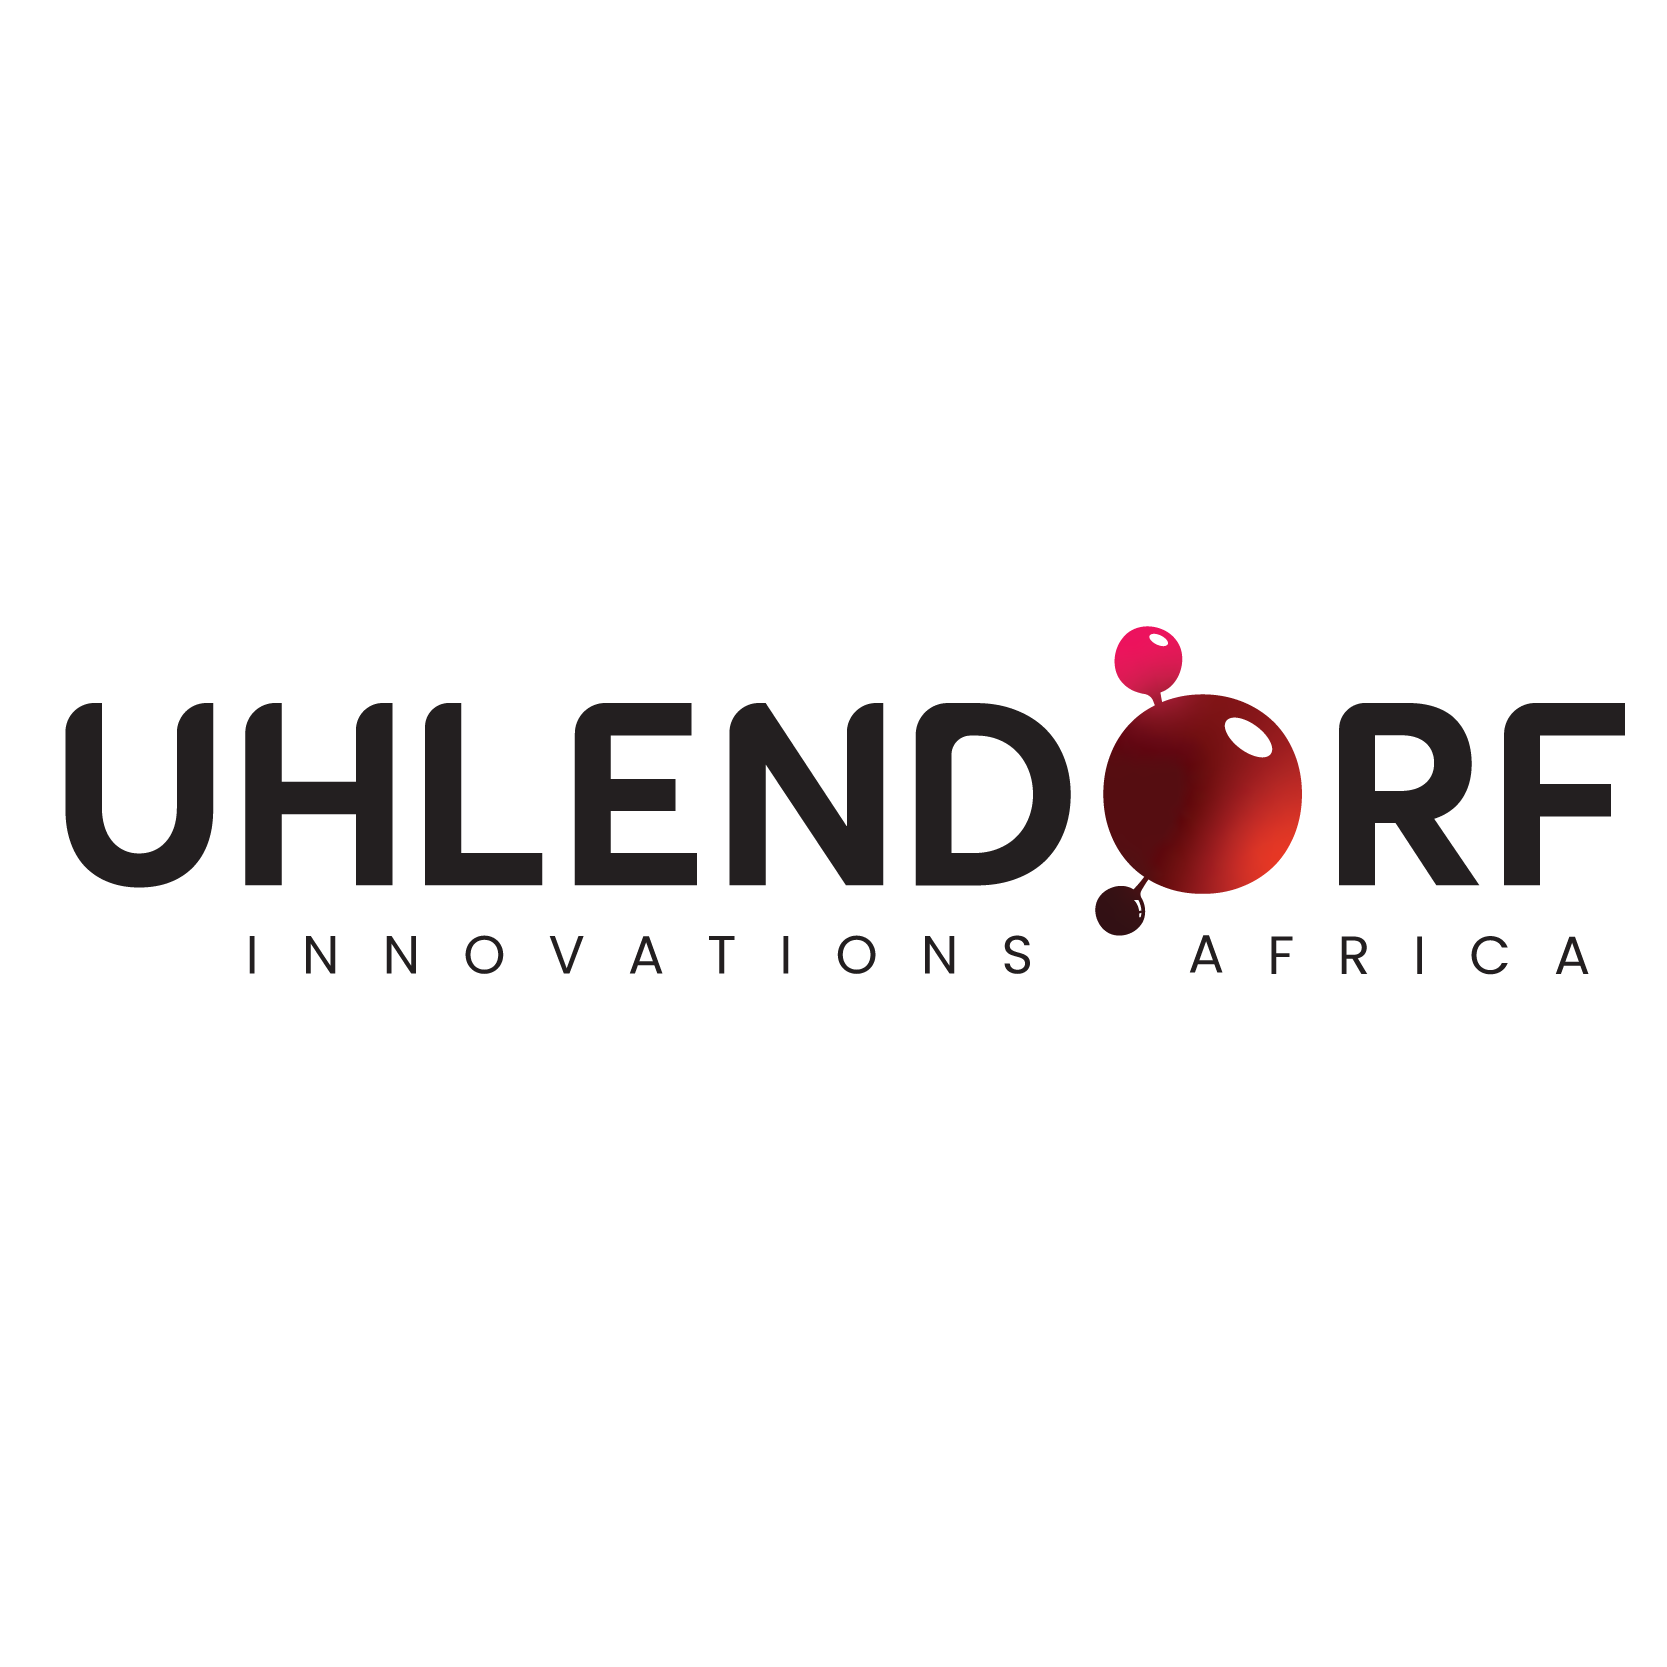 Uhlendorf Innovations Africa